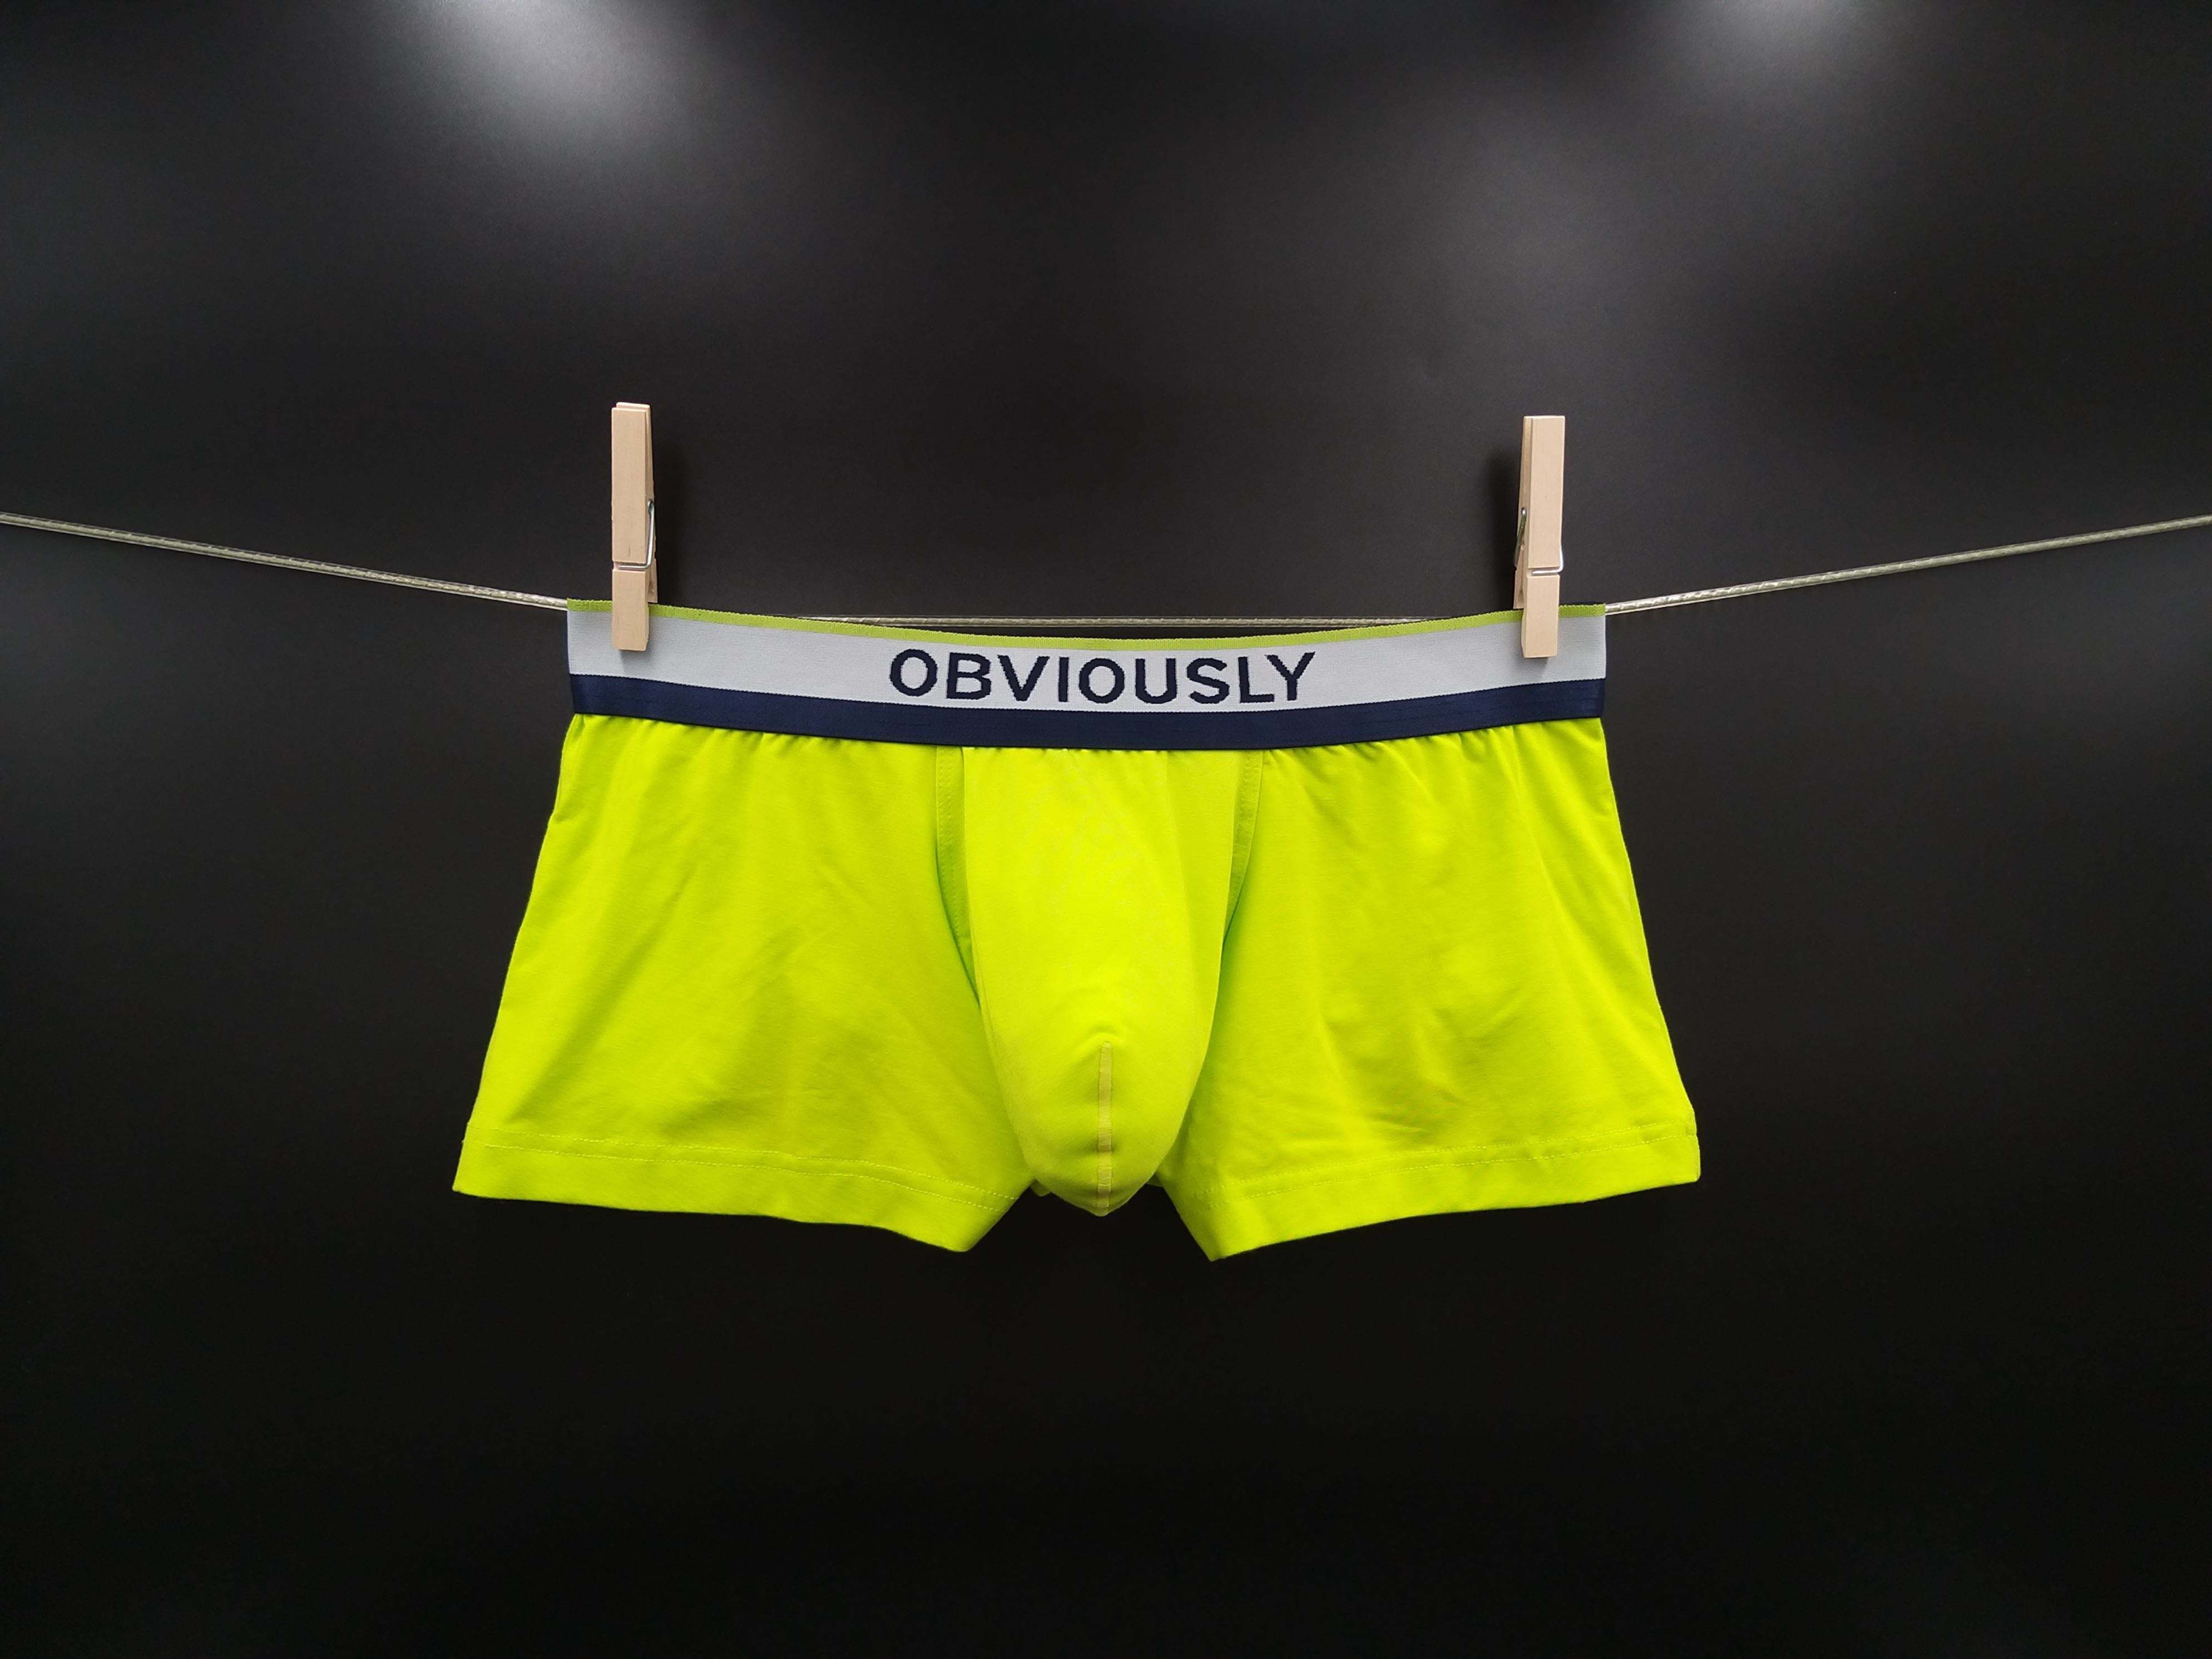 EveryMan Underwear